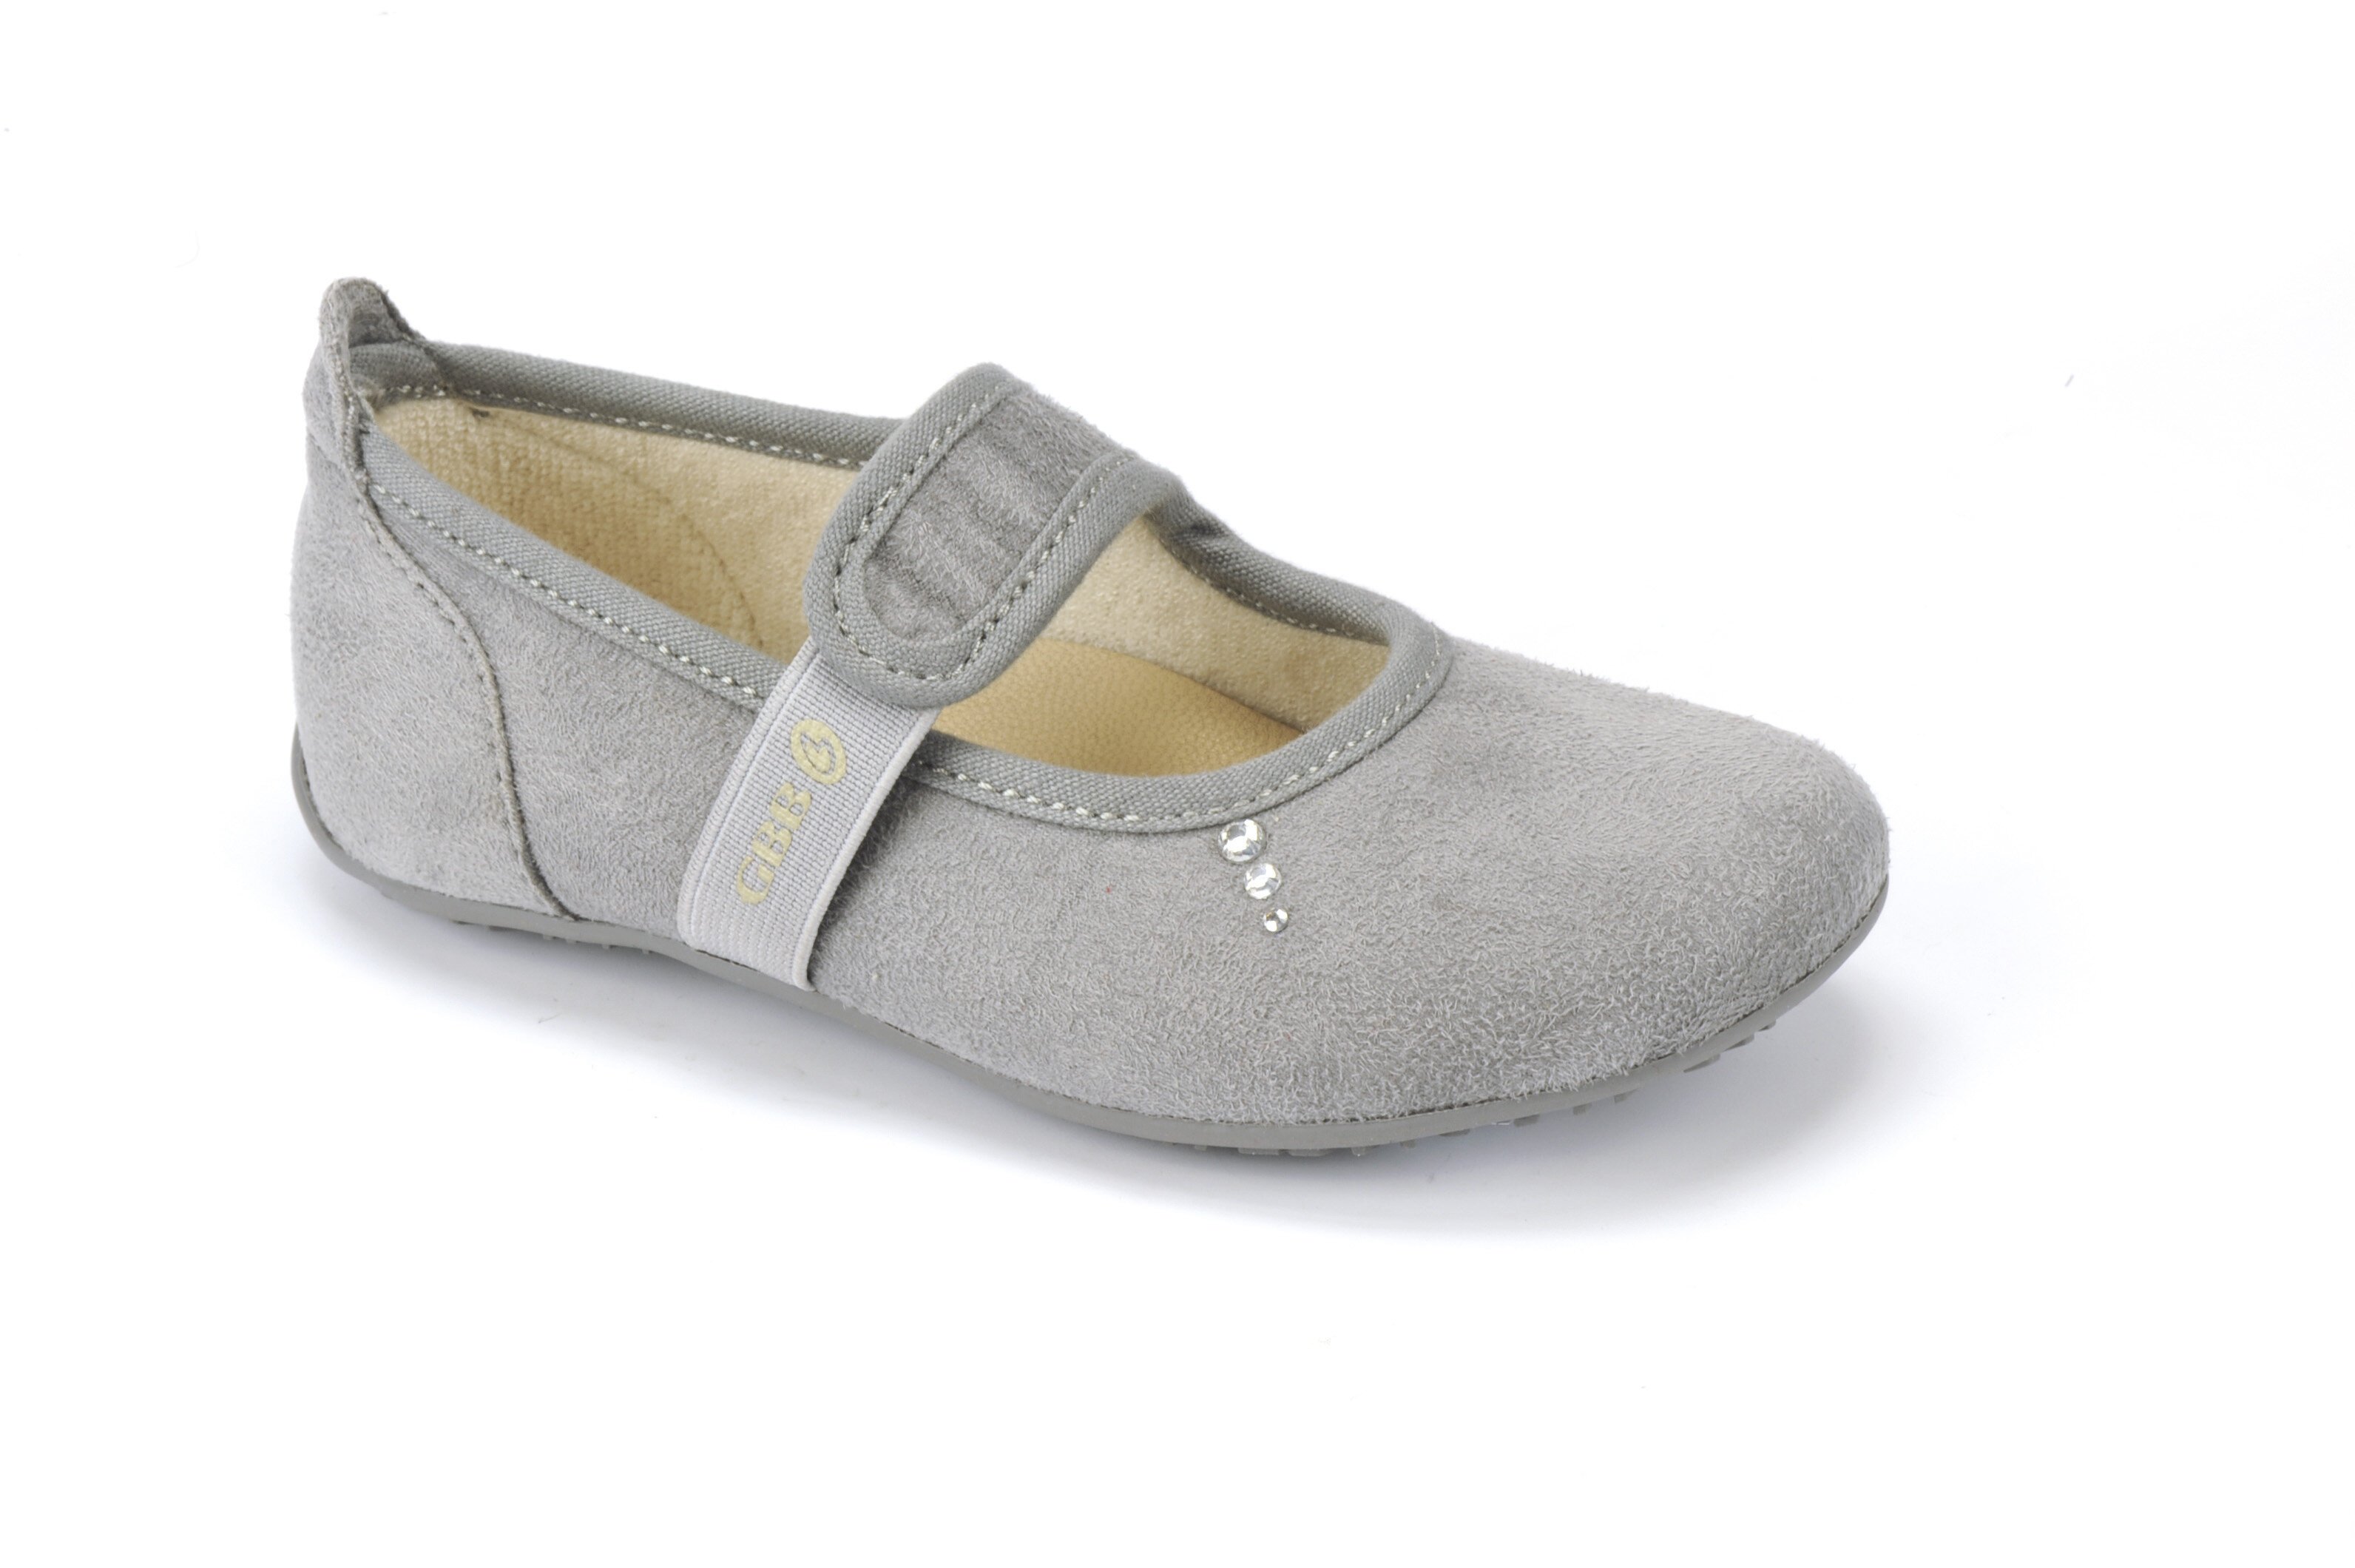 GBB Albatros Slipper - Accessories : Fussy Feet | Shop Kids Shoes ...